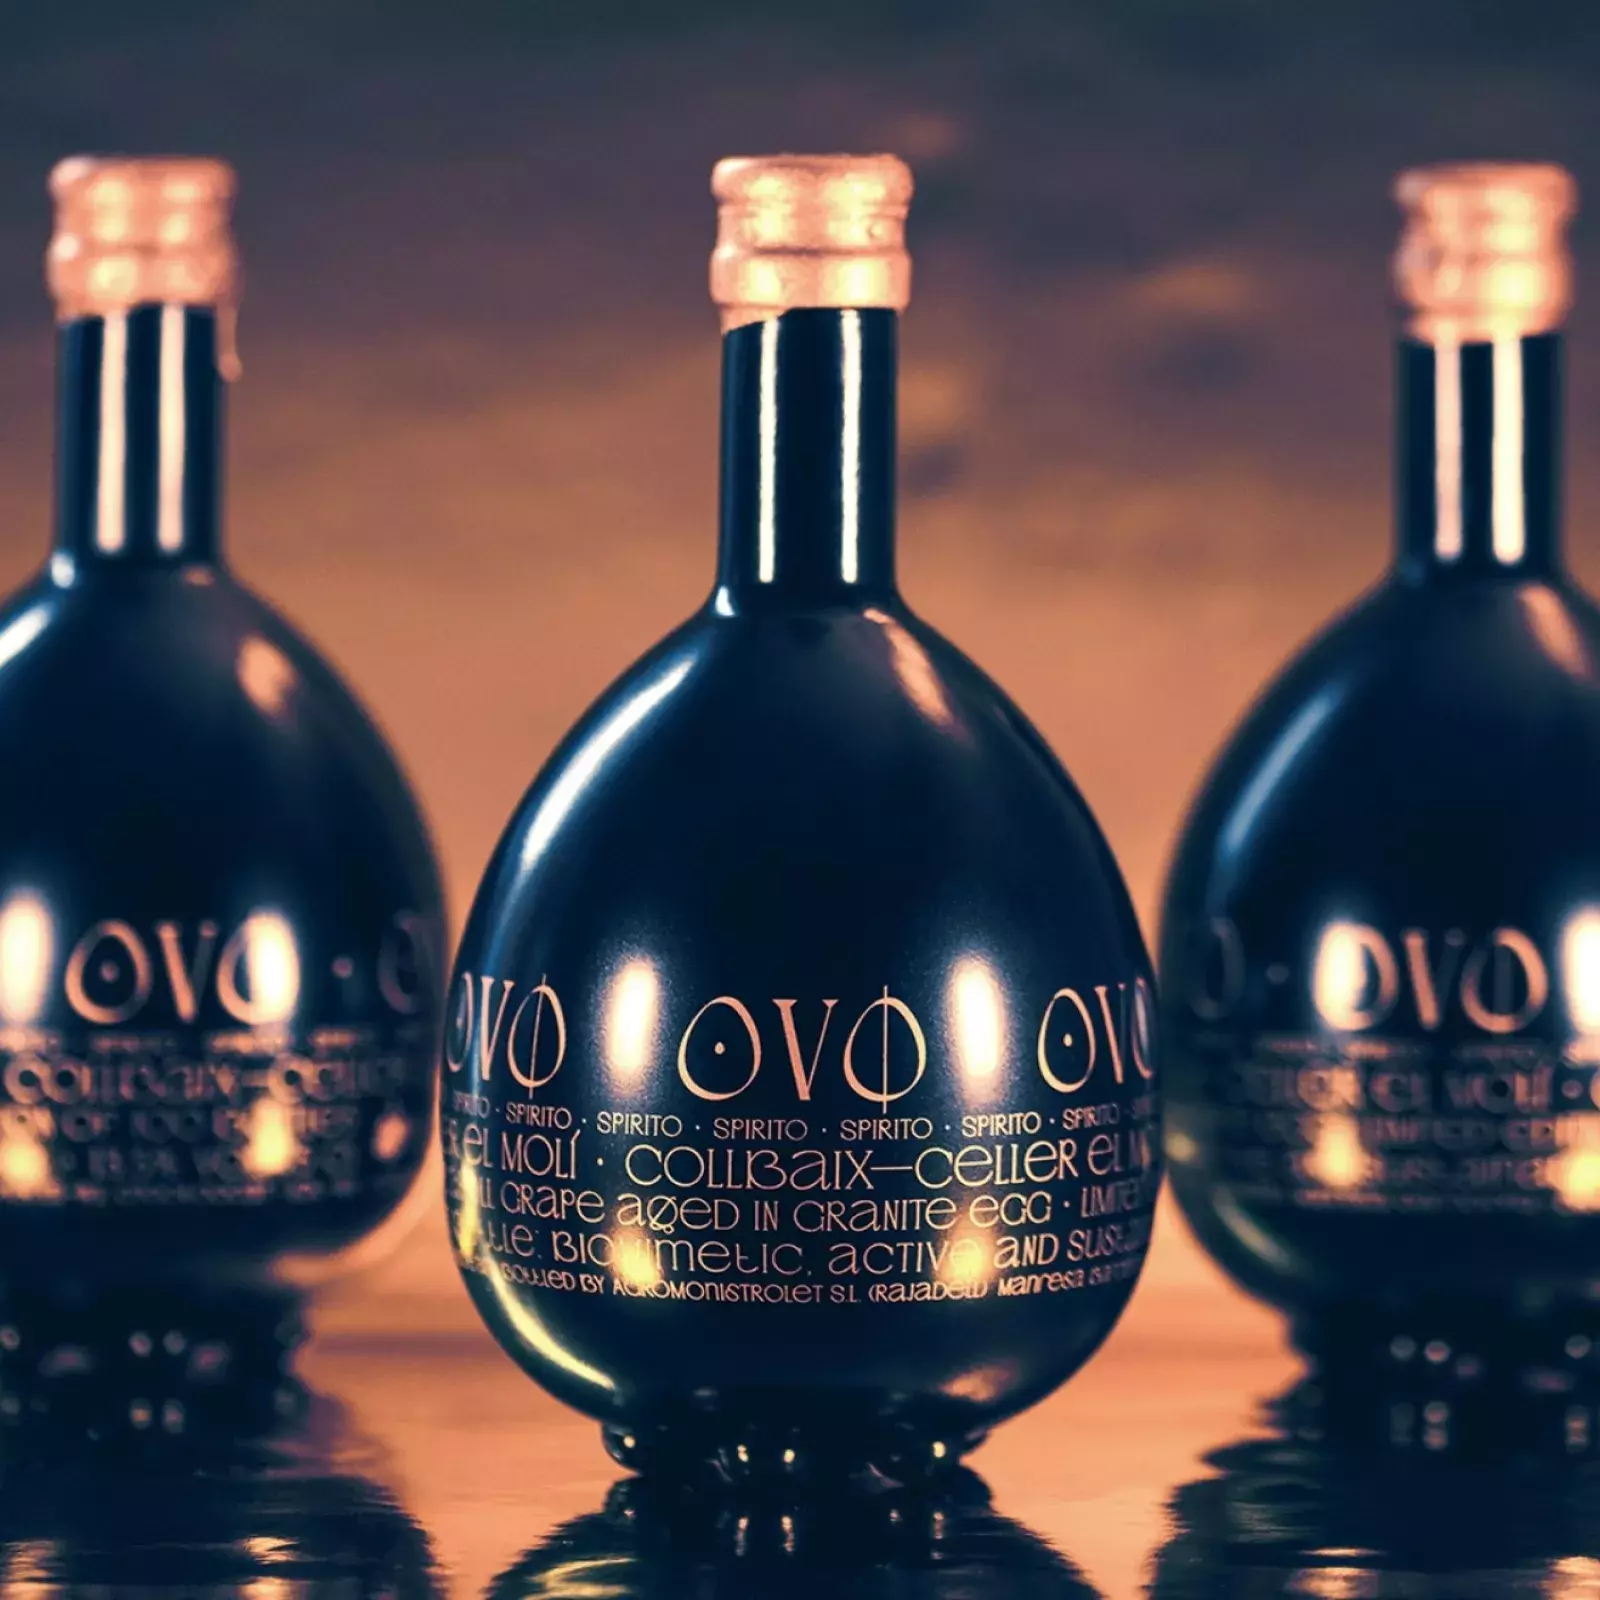 OVØ, biodynamic wines - One-of-a-kind design